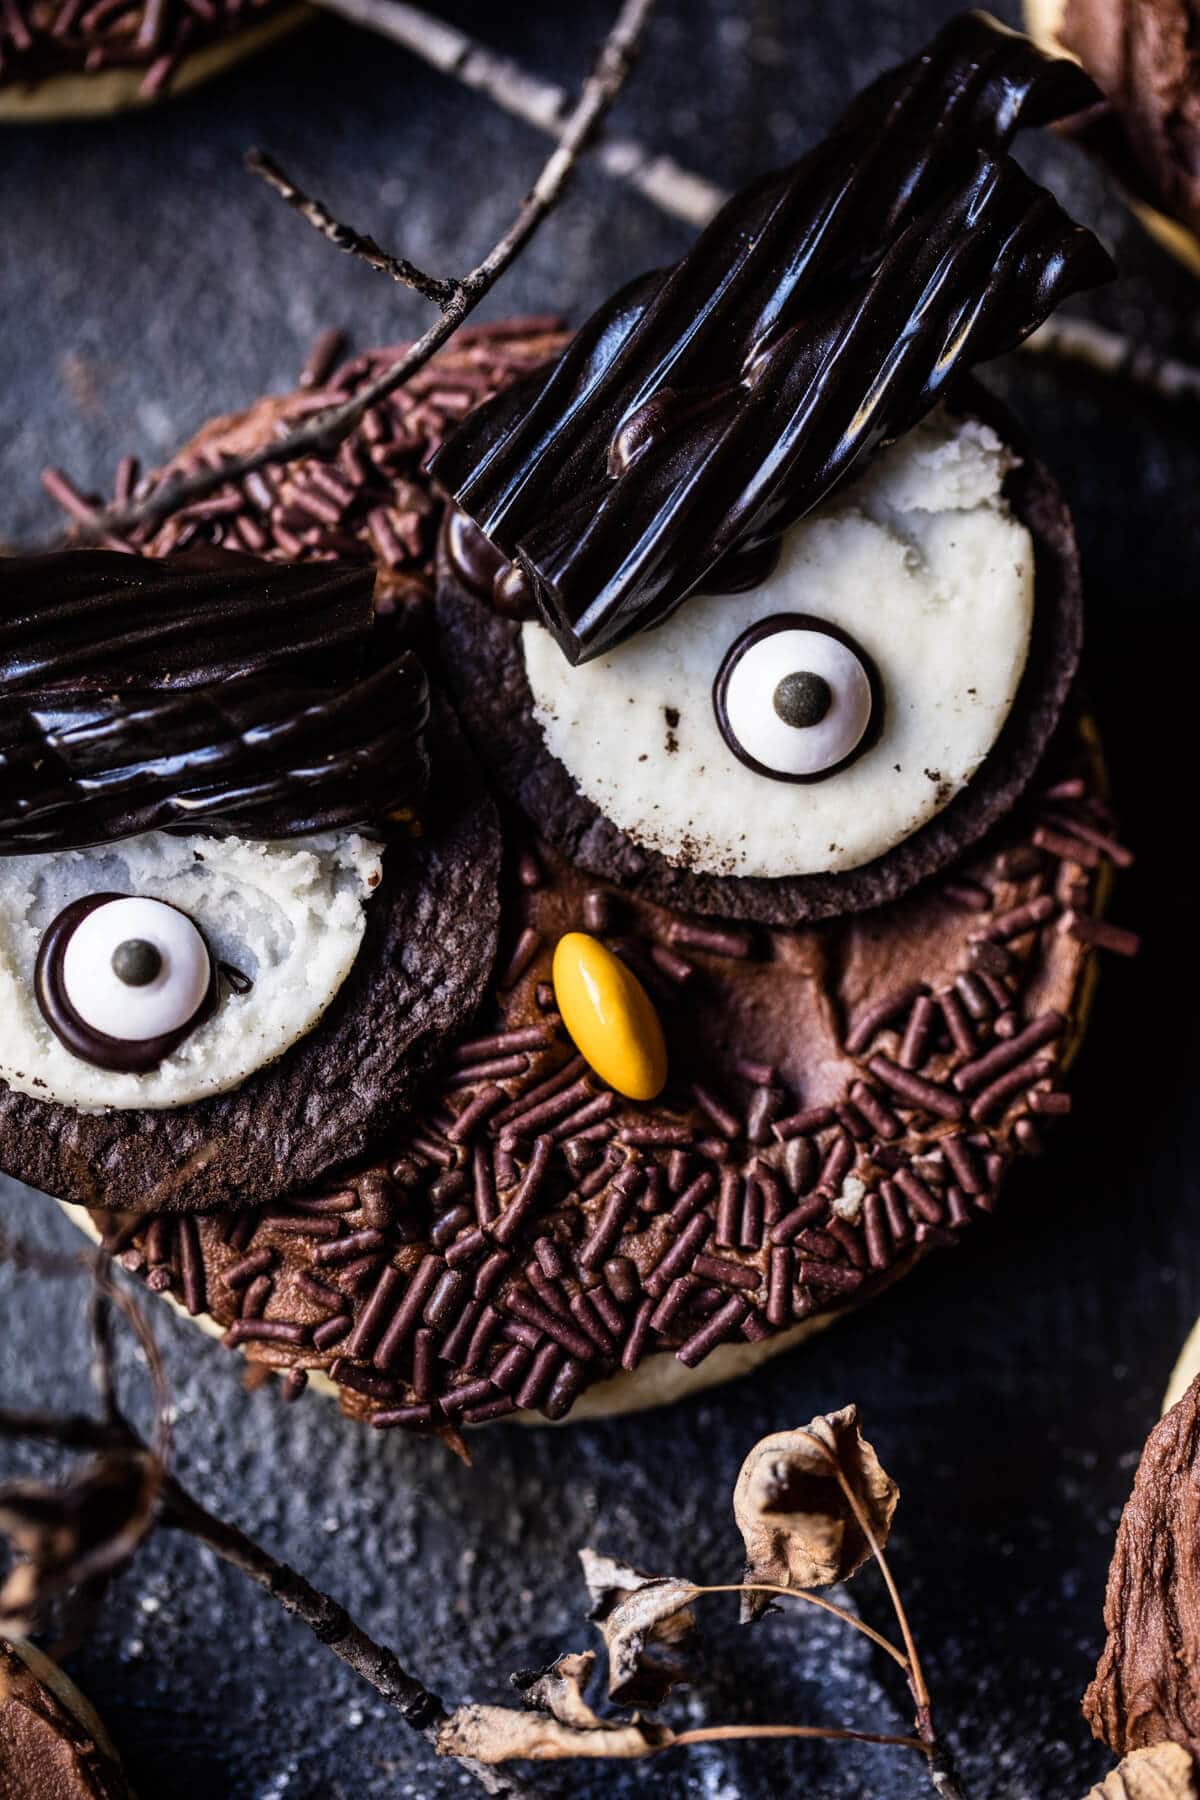 Monster Mash Cookies | halfbakedharvest.com @hbharvest